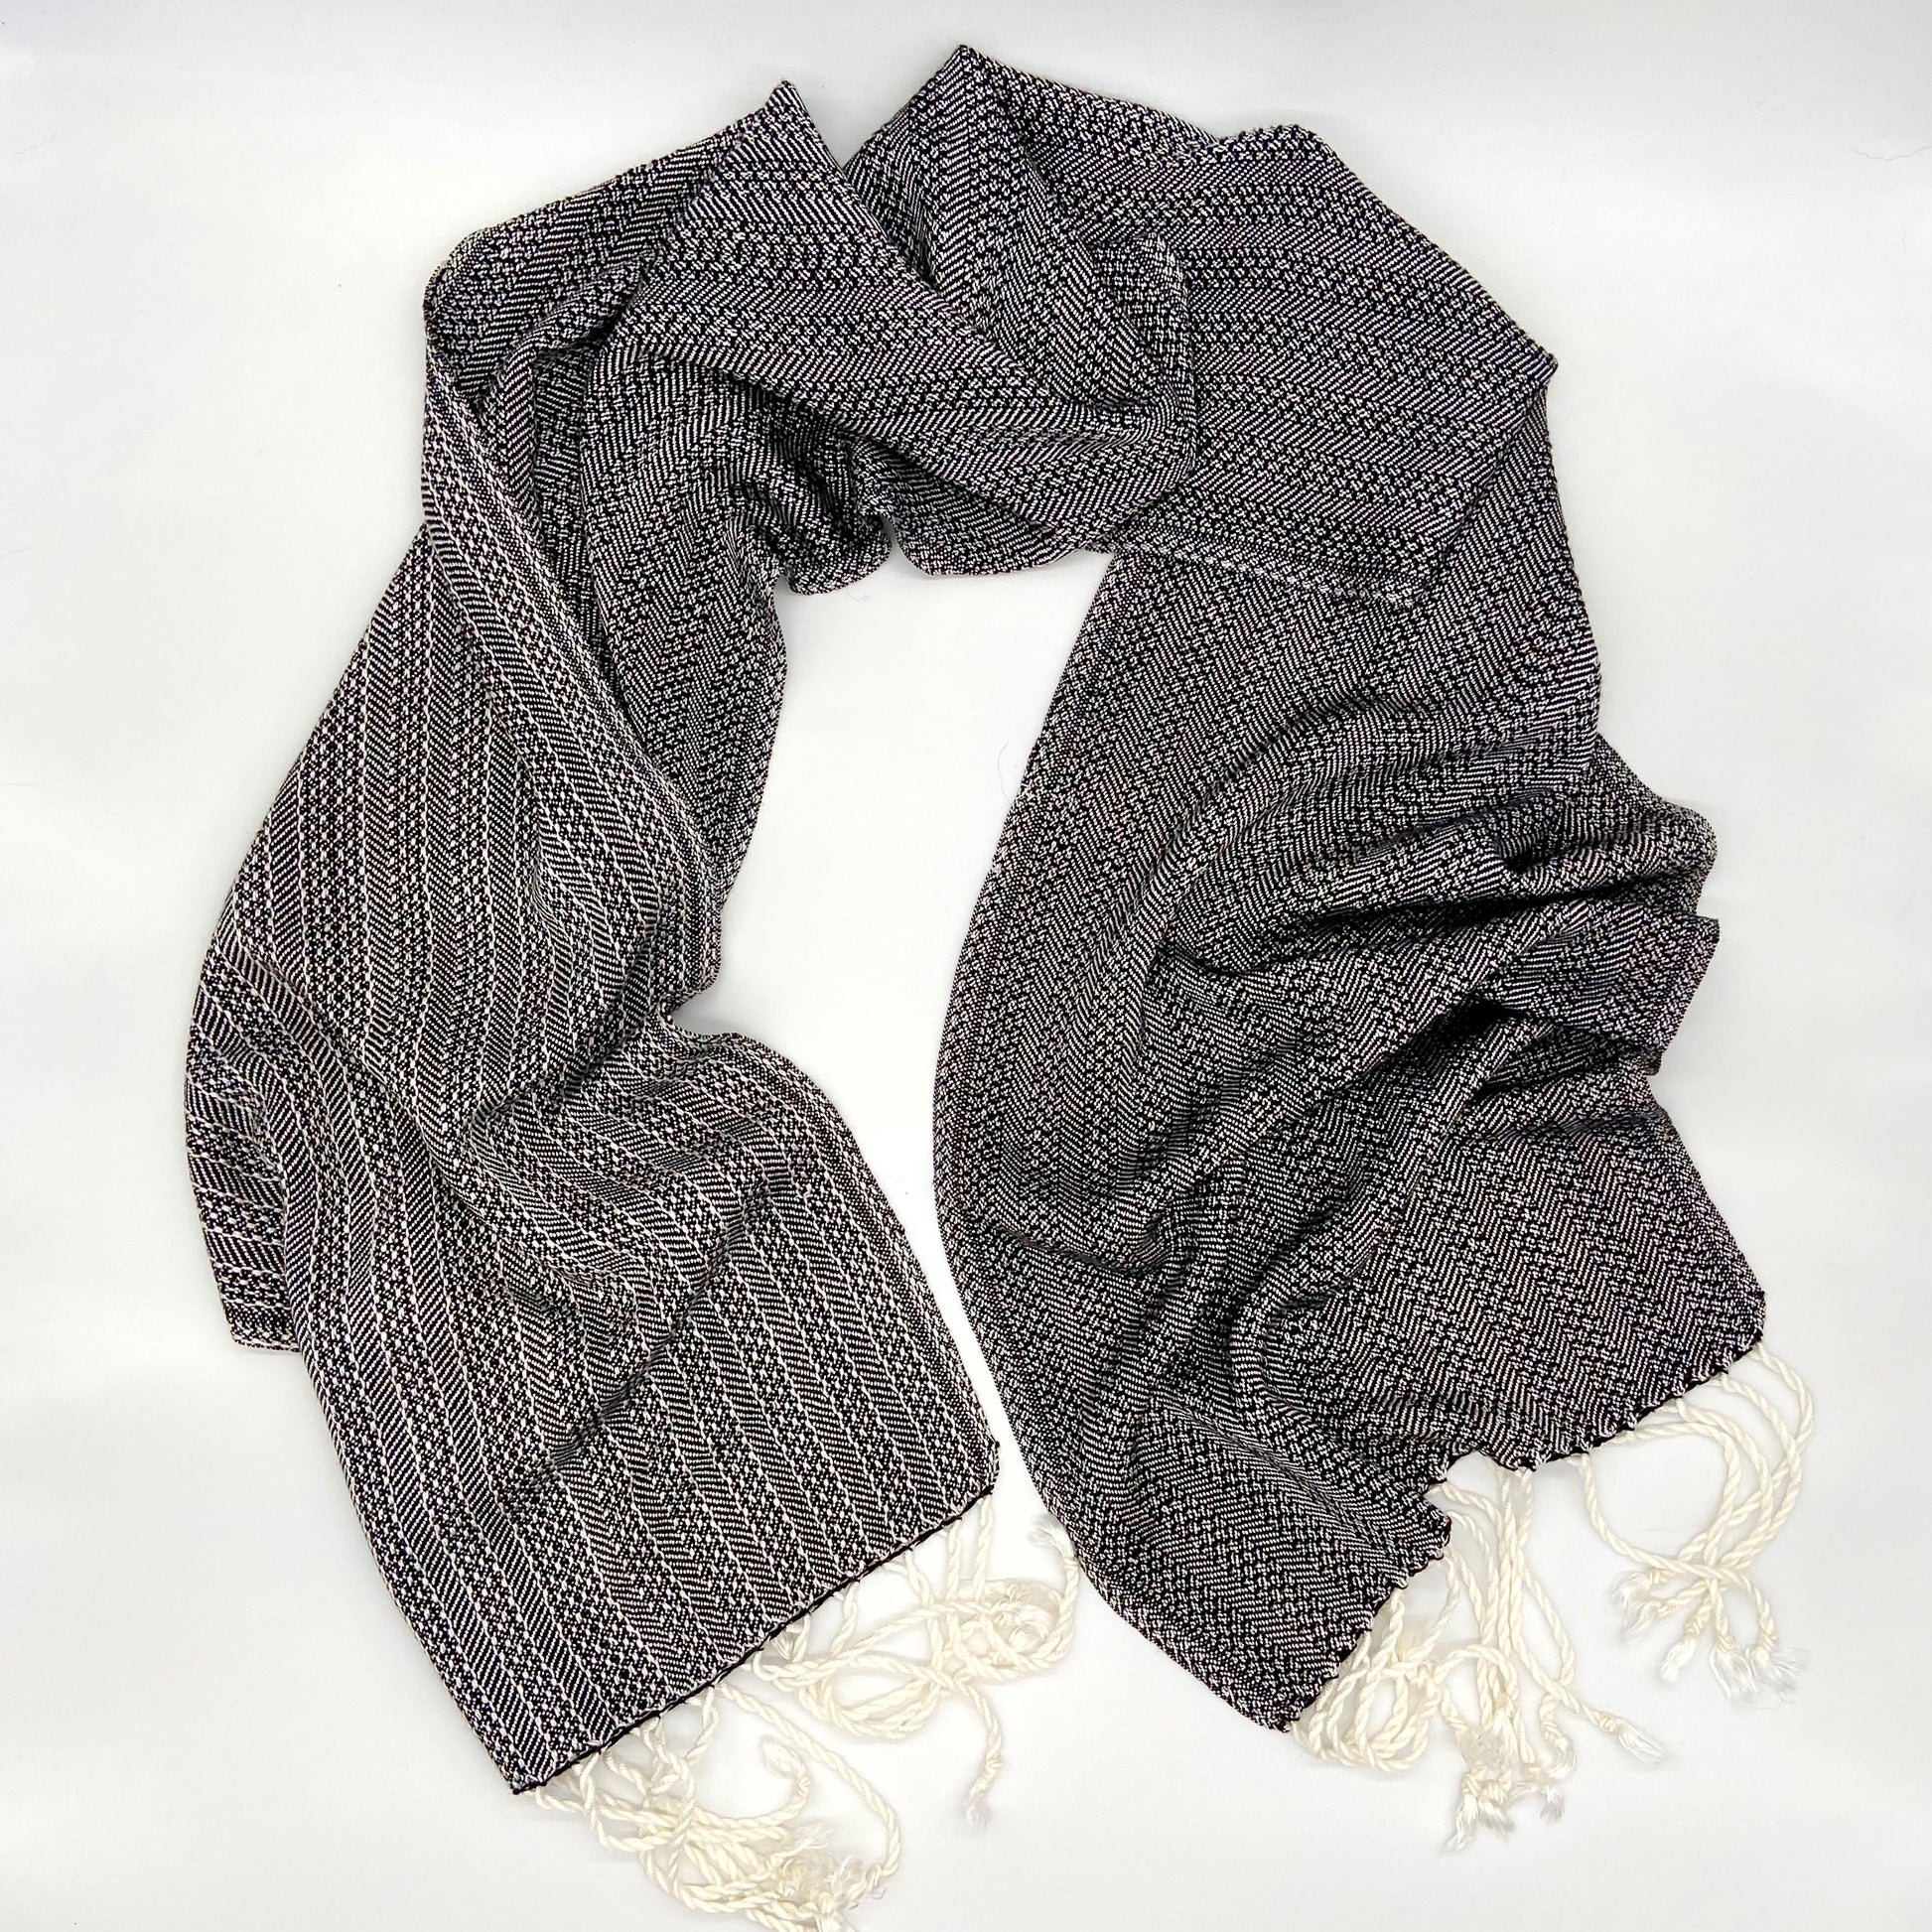 Classic Neutral- Black and White - Sydney Sogol, Classic Scarves, classic-neutral-black-and-white, scarf, tencel